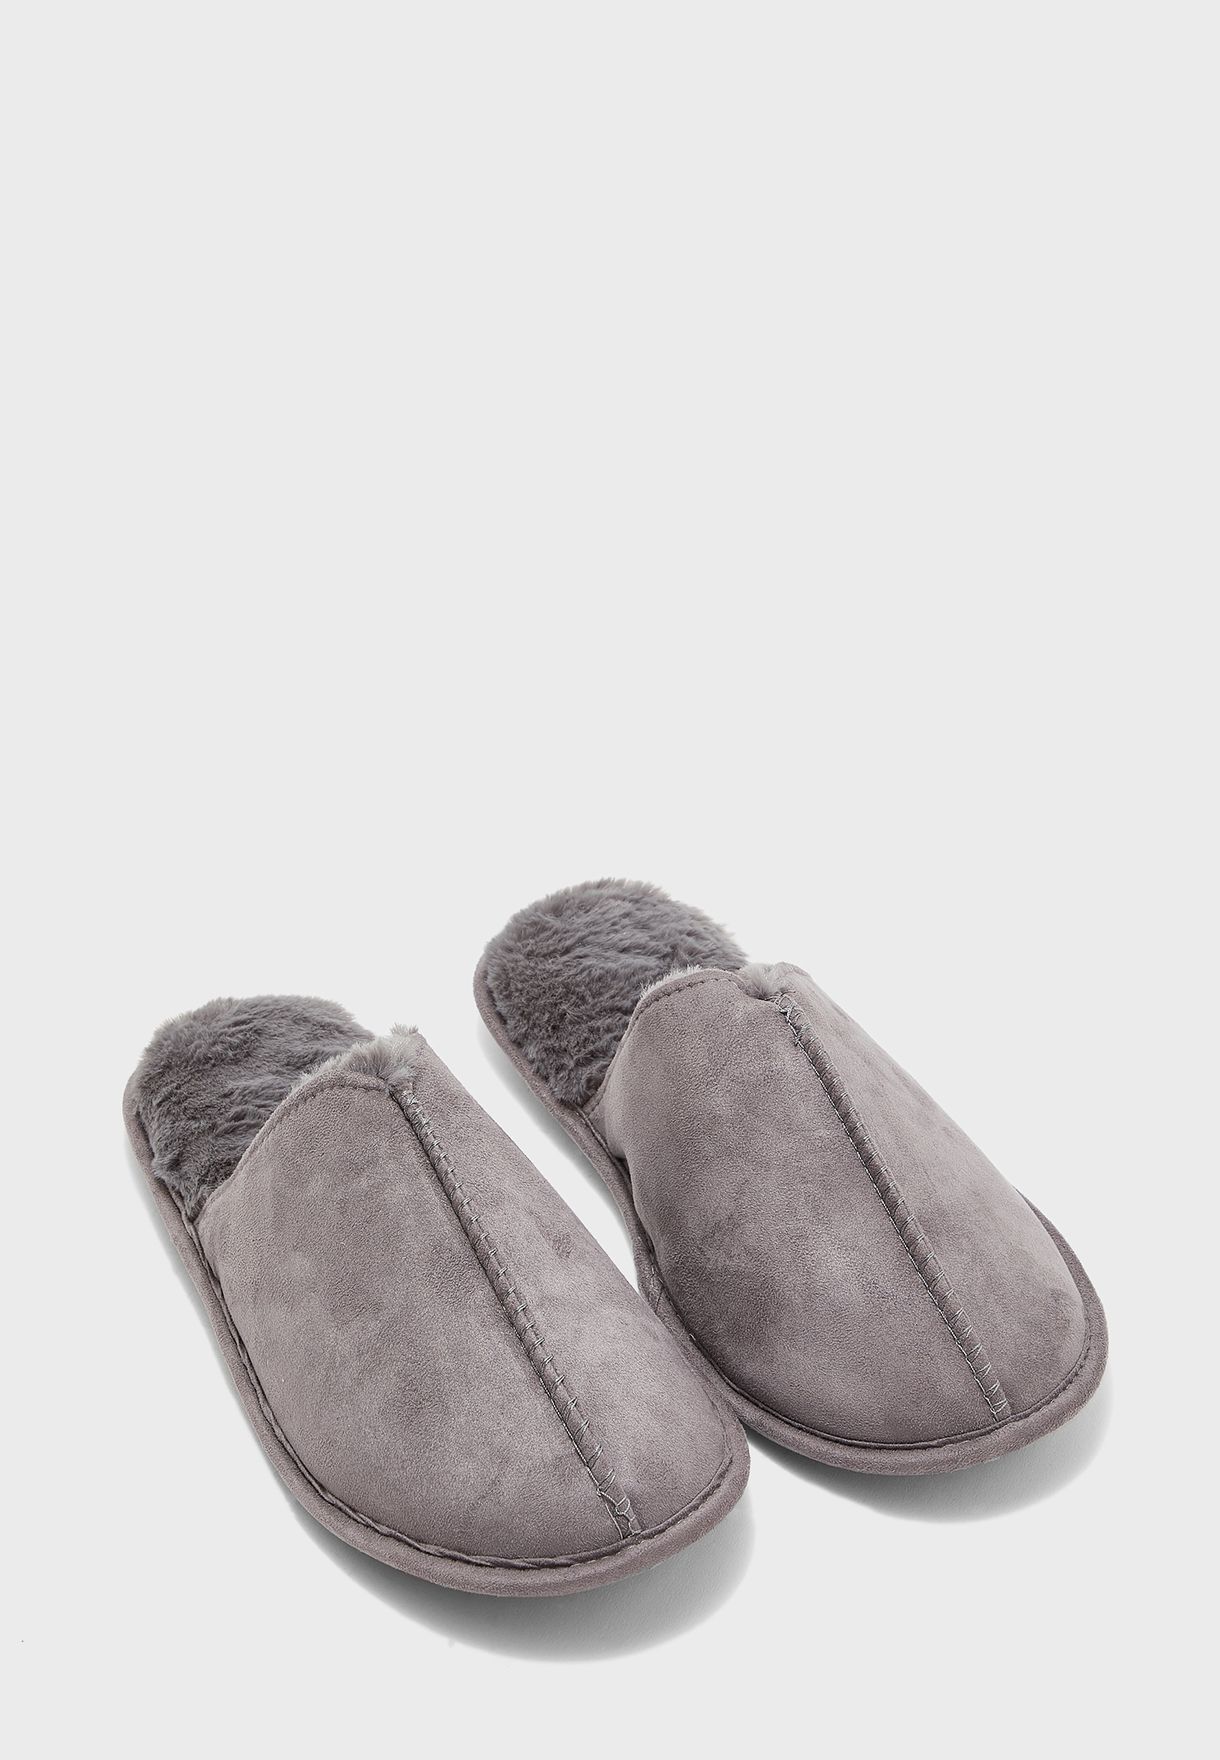 burtons slippers